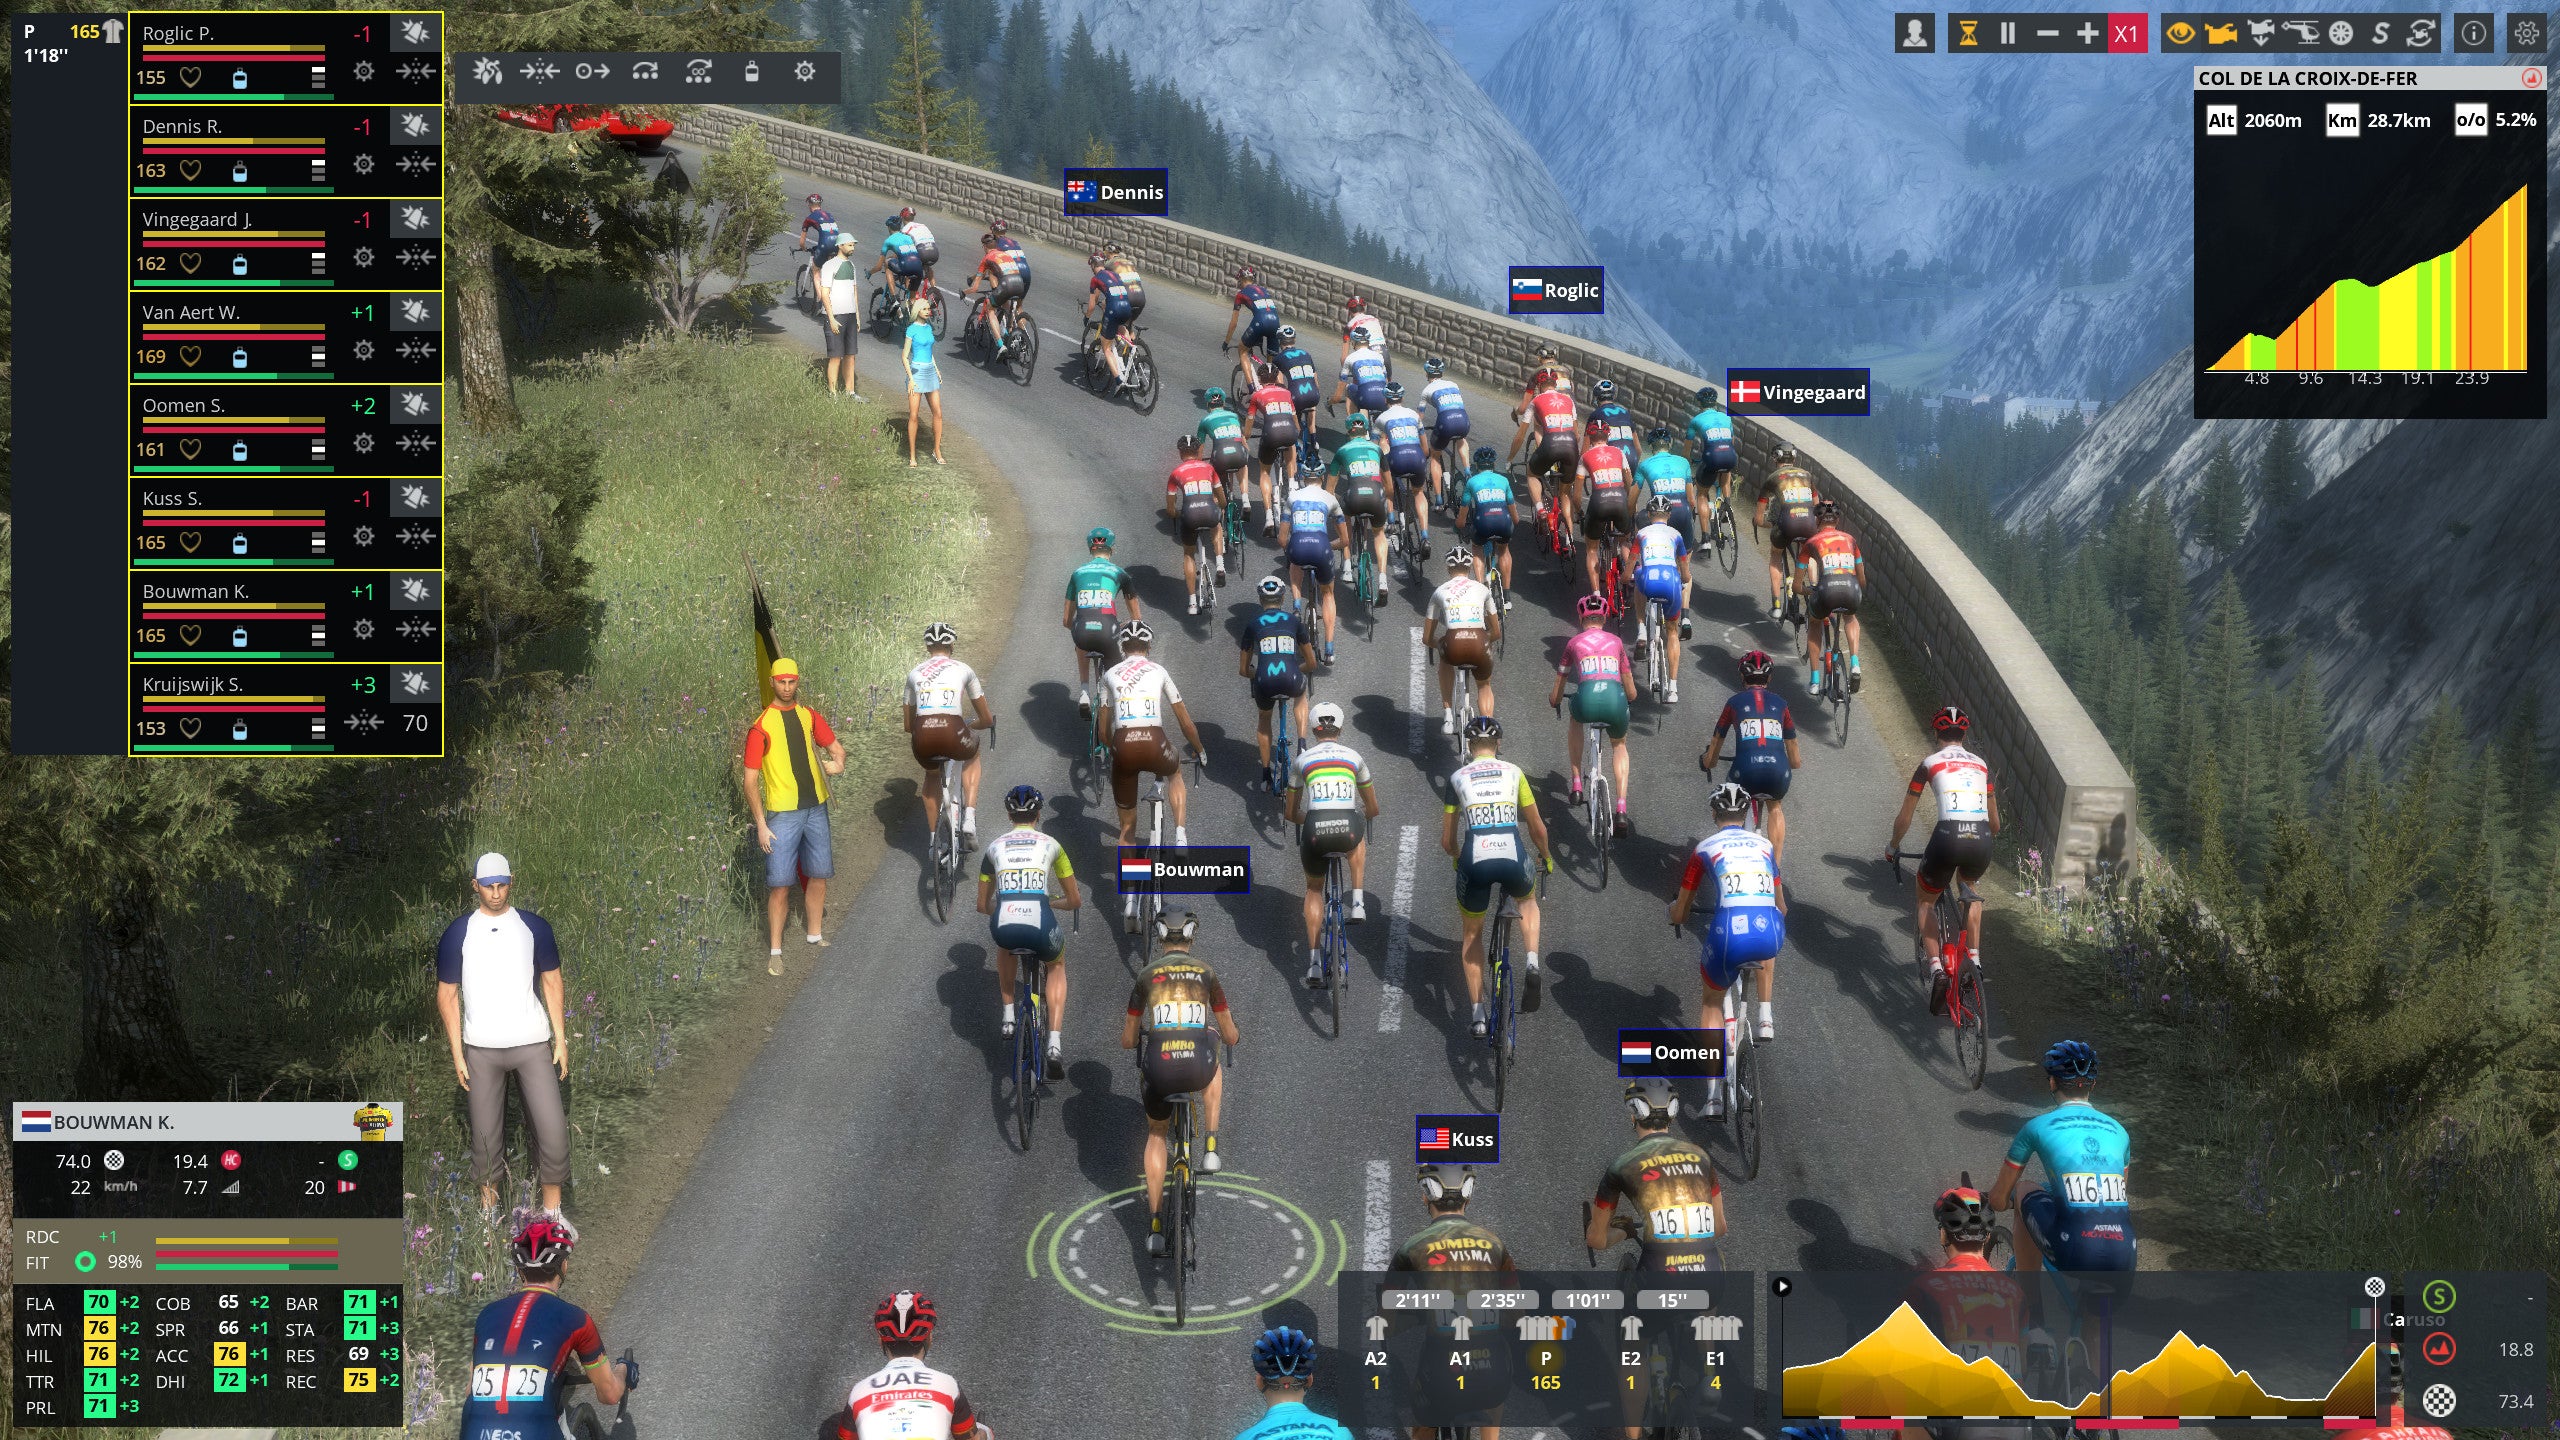 Tour De Jeux: Learning pr0 stratz from cycling management games